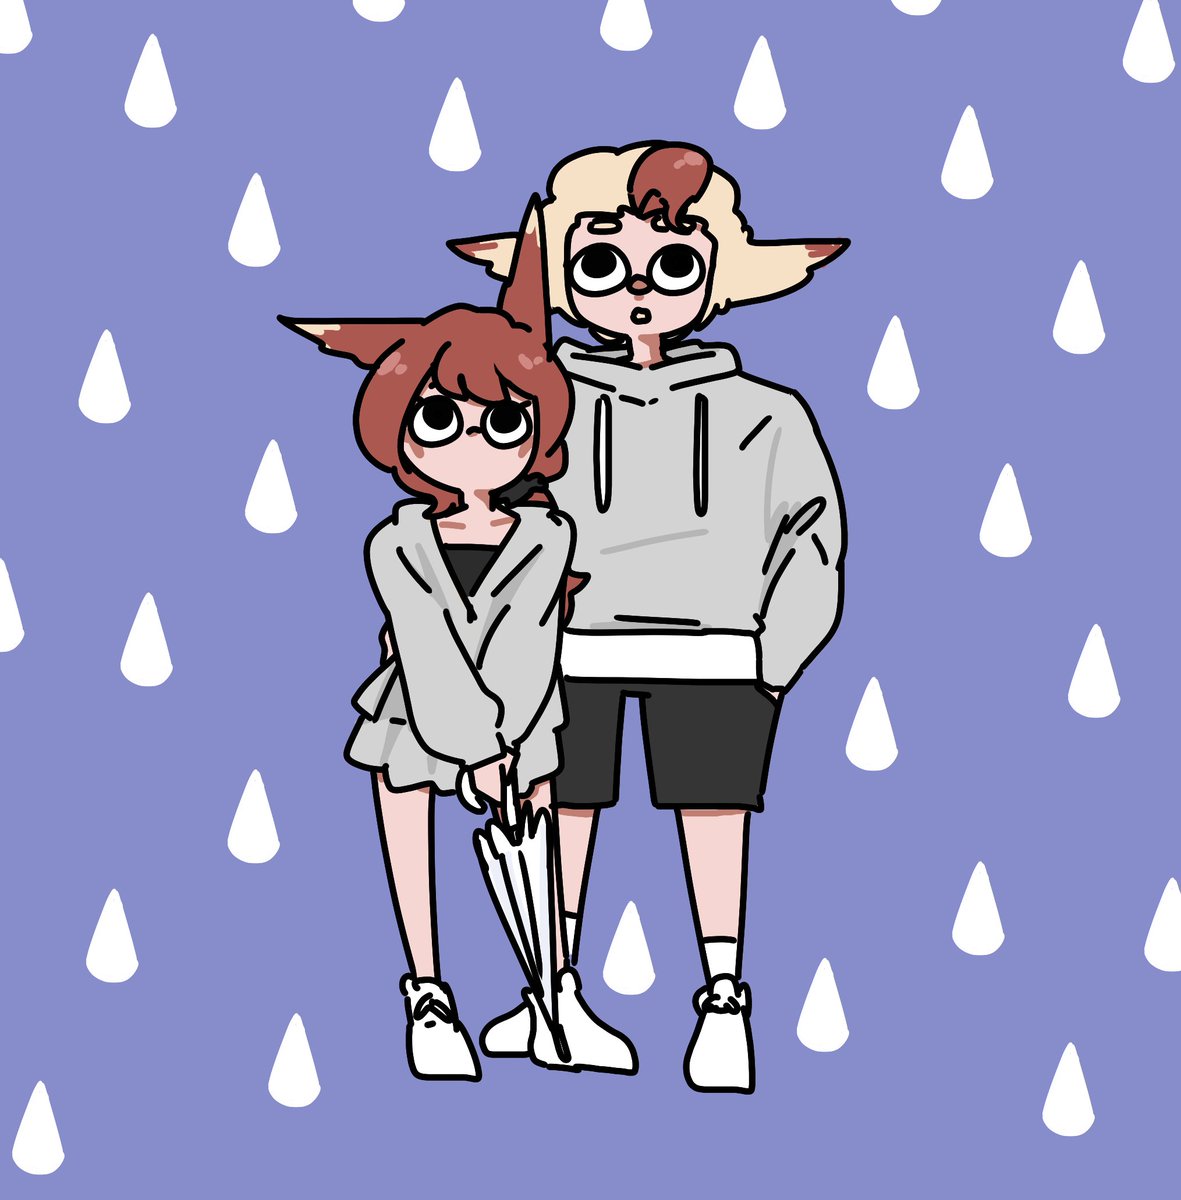 1girl 1boy umbrella holding umbrella white footwear shorts glasses  illustration images